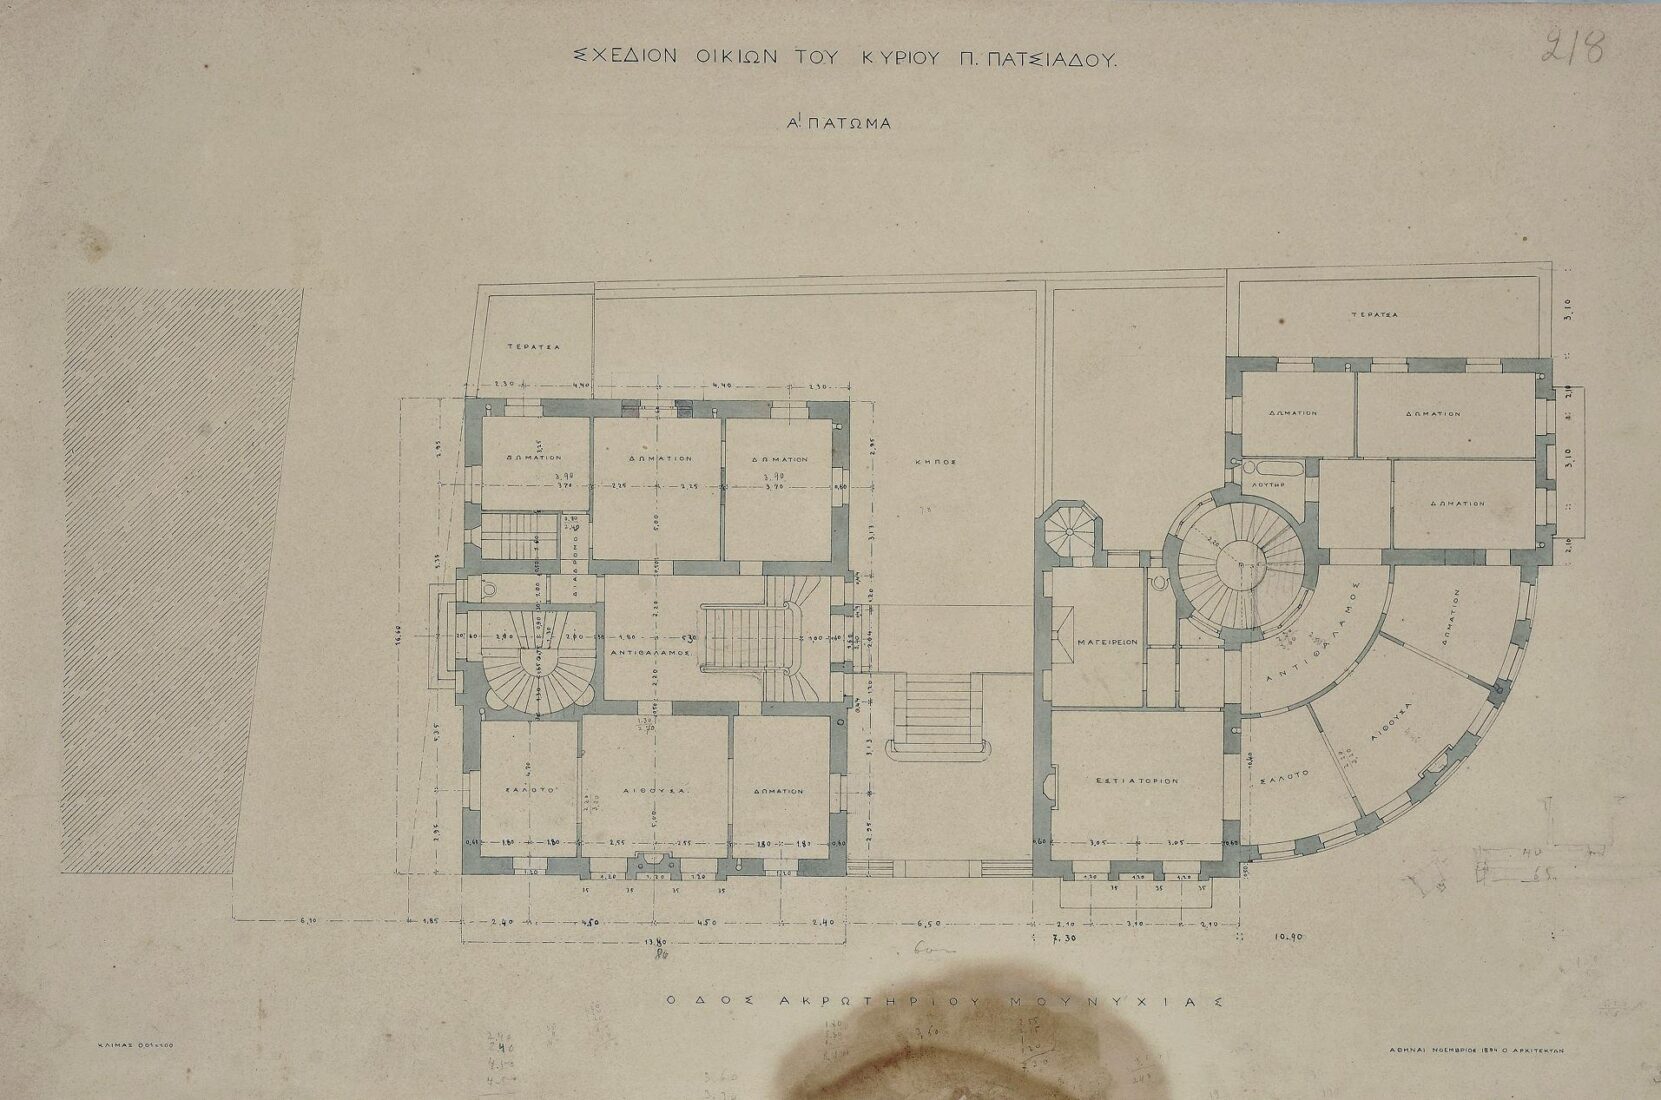 P. Patsiadis Houses, Alexandras Square, Zea. 1st Floor Plan - Ziller Ernst